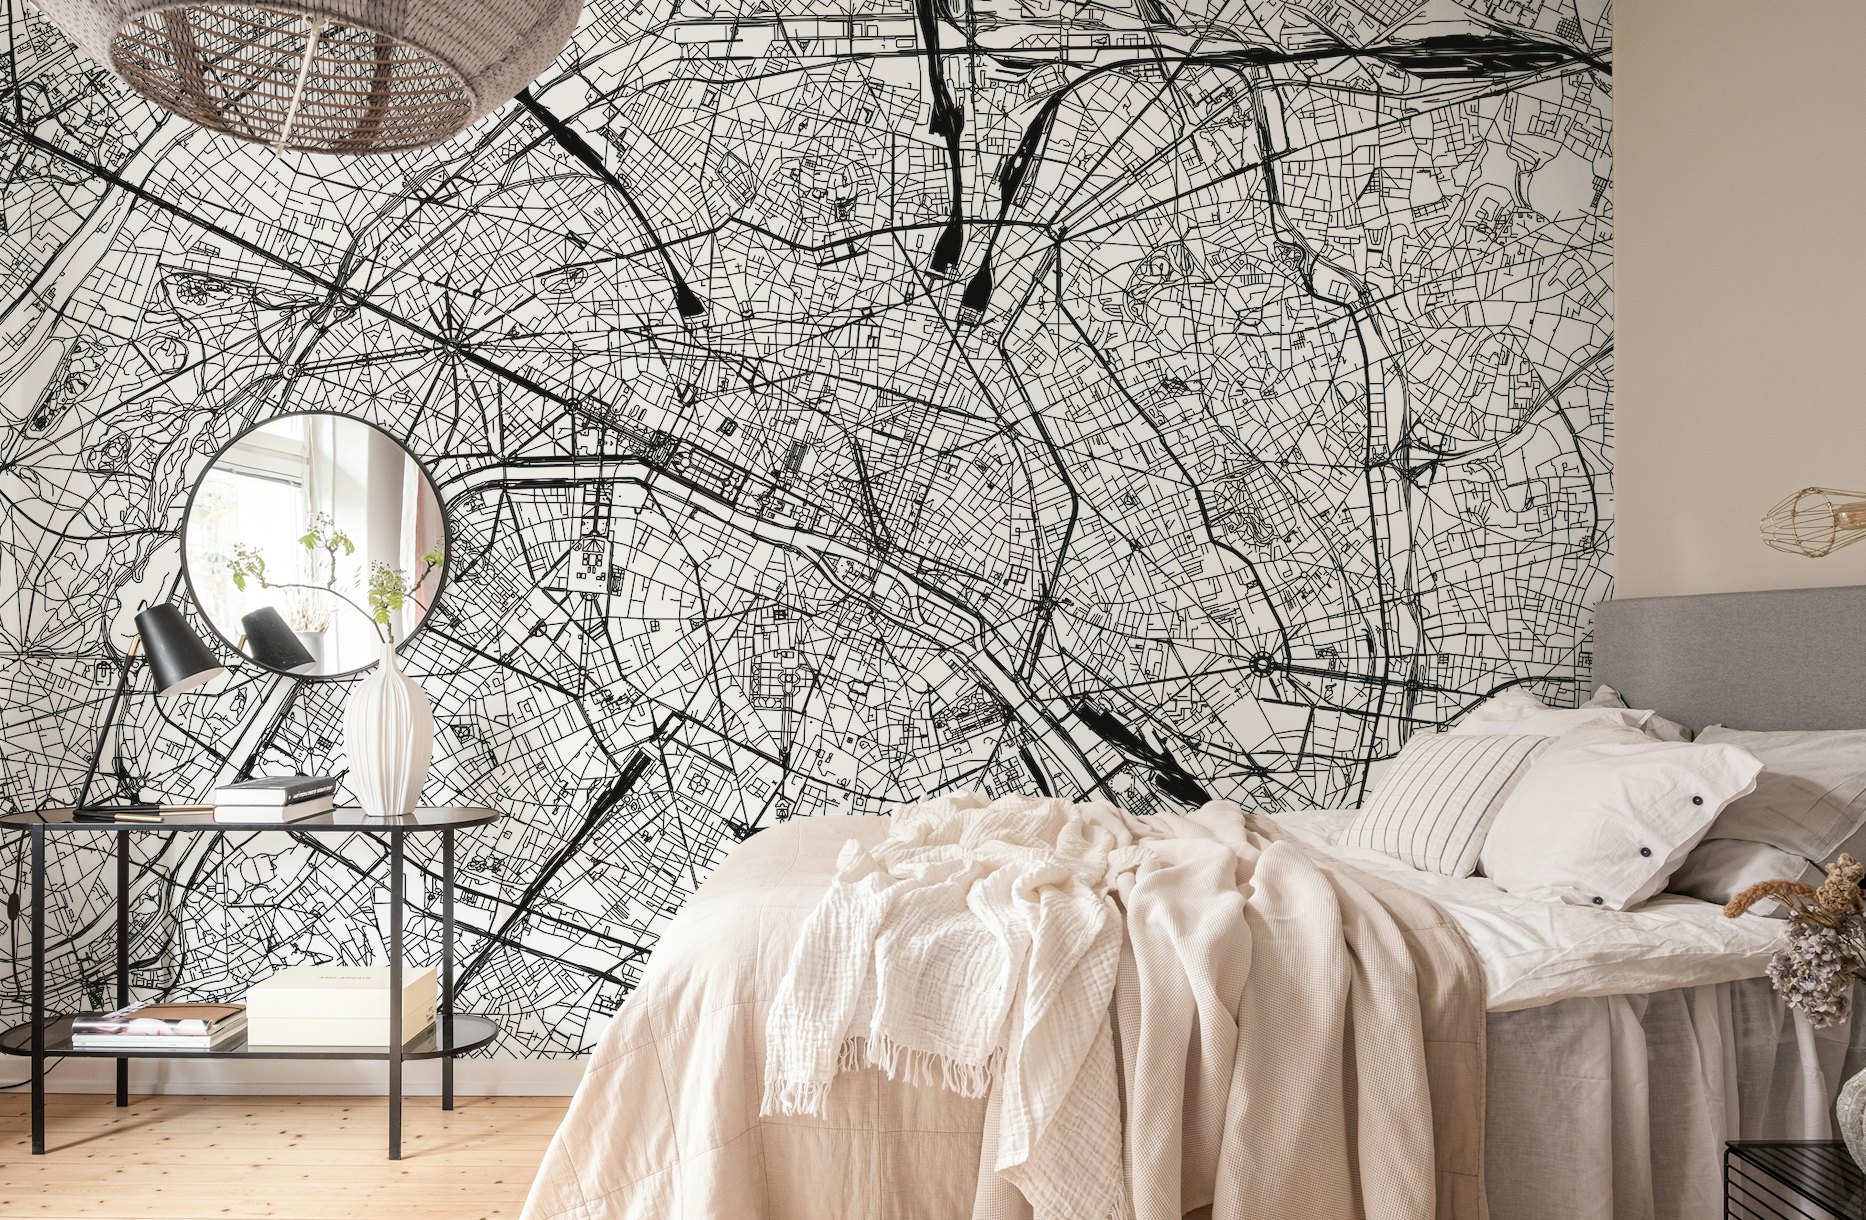 Elegant Paris map wallpaper showcasing a detailed city street layout